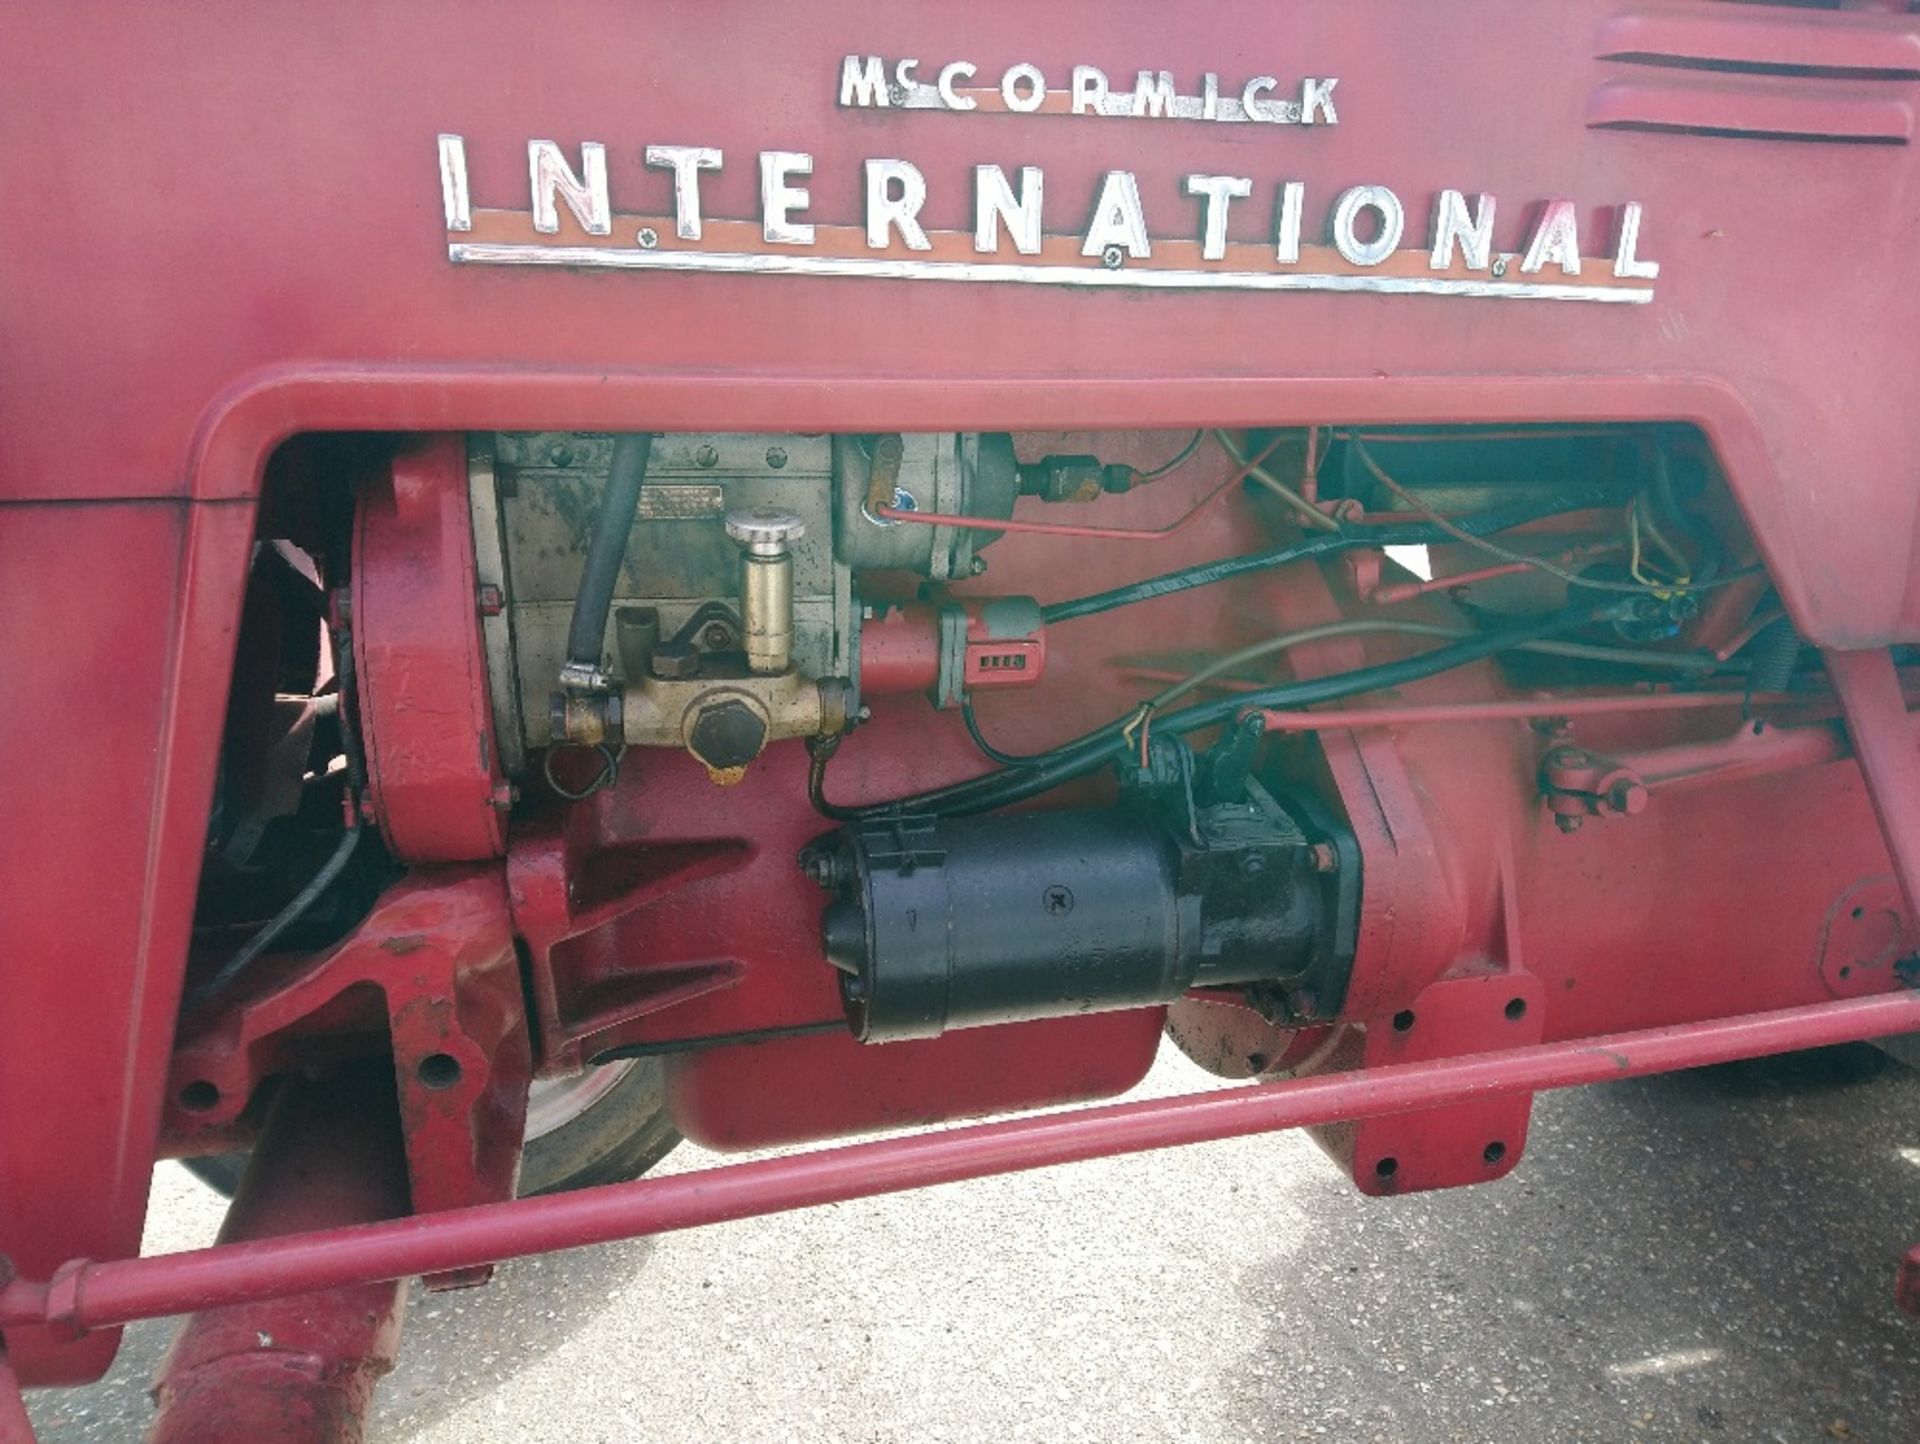 1957 McCormick B250 2wd Tractor, Reg VRT 691 Serial no. 064, B250 12.4 R 28 rear w/t, 6. - Image 5 of 8